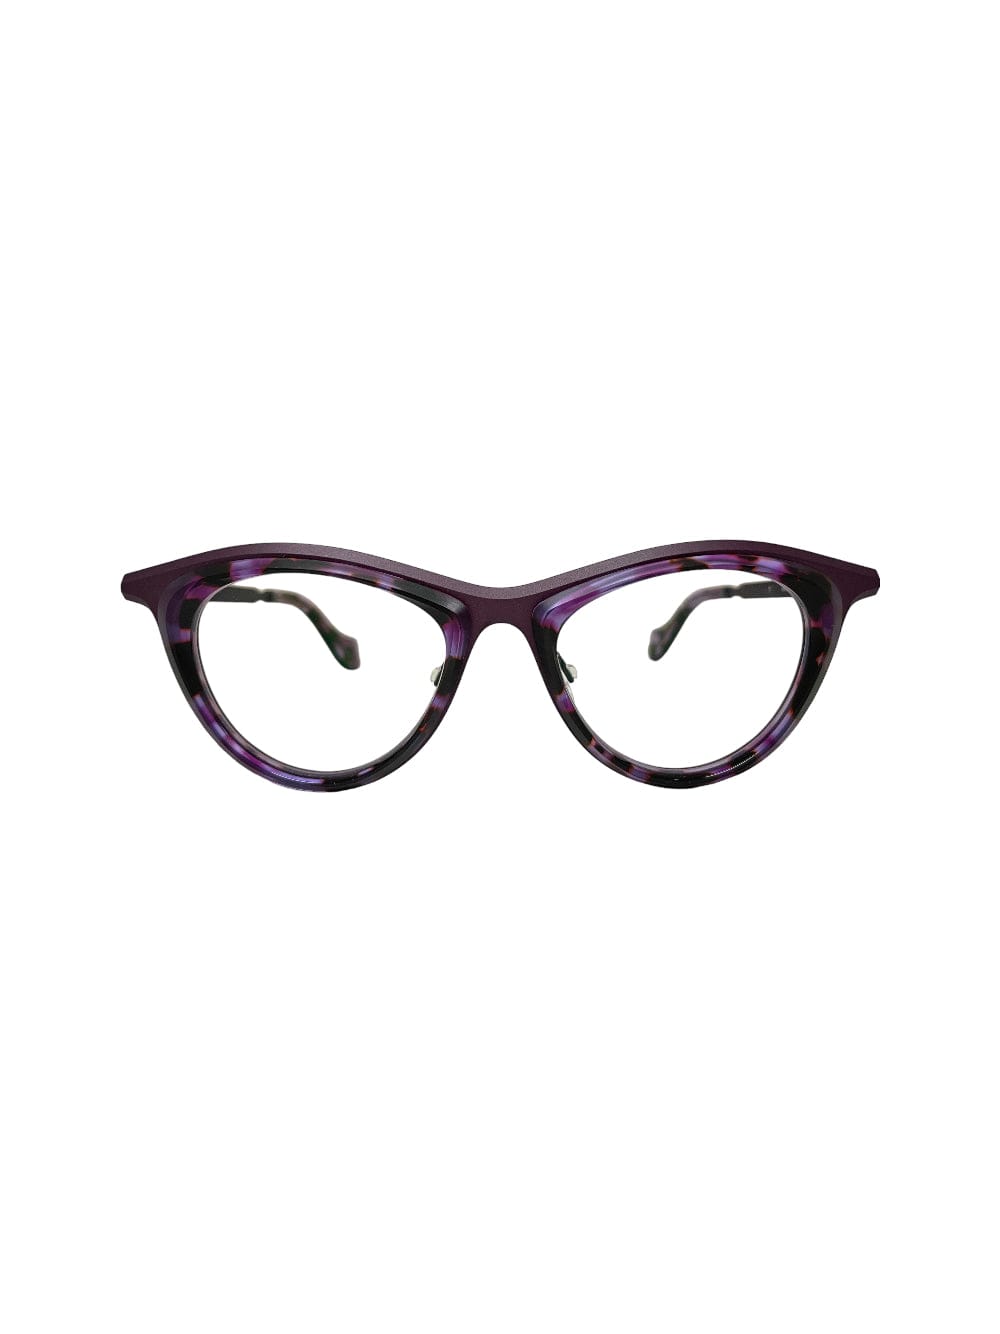 theo eyewear pave - purple glasses